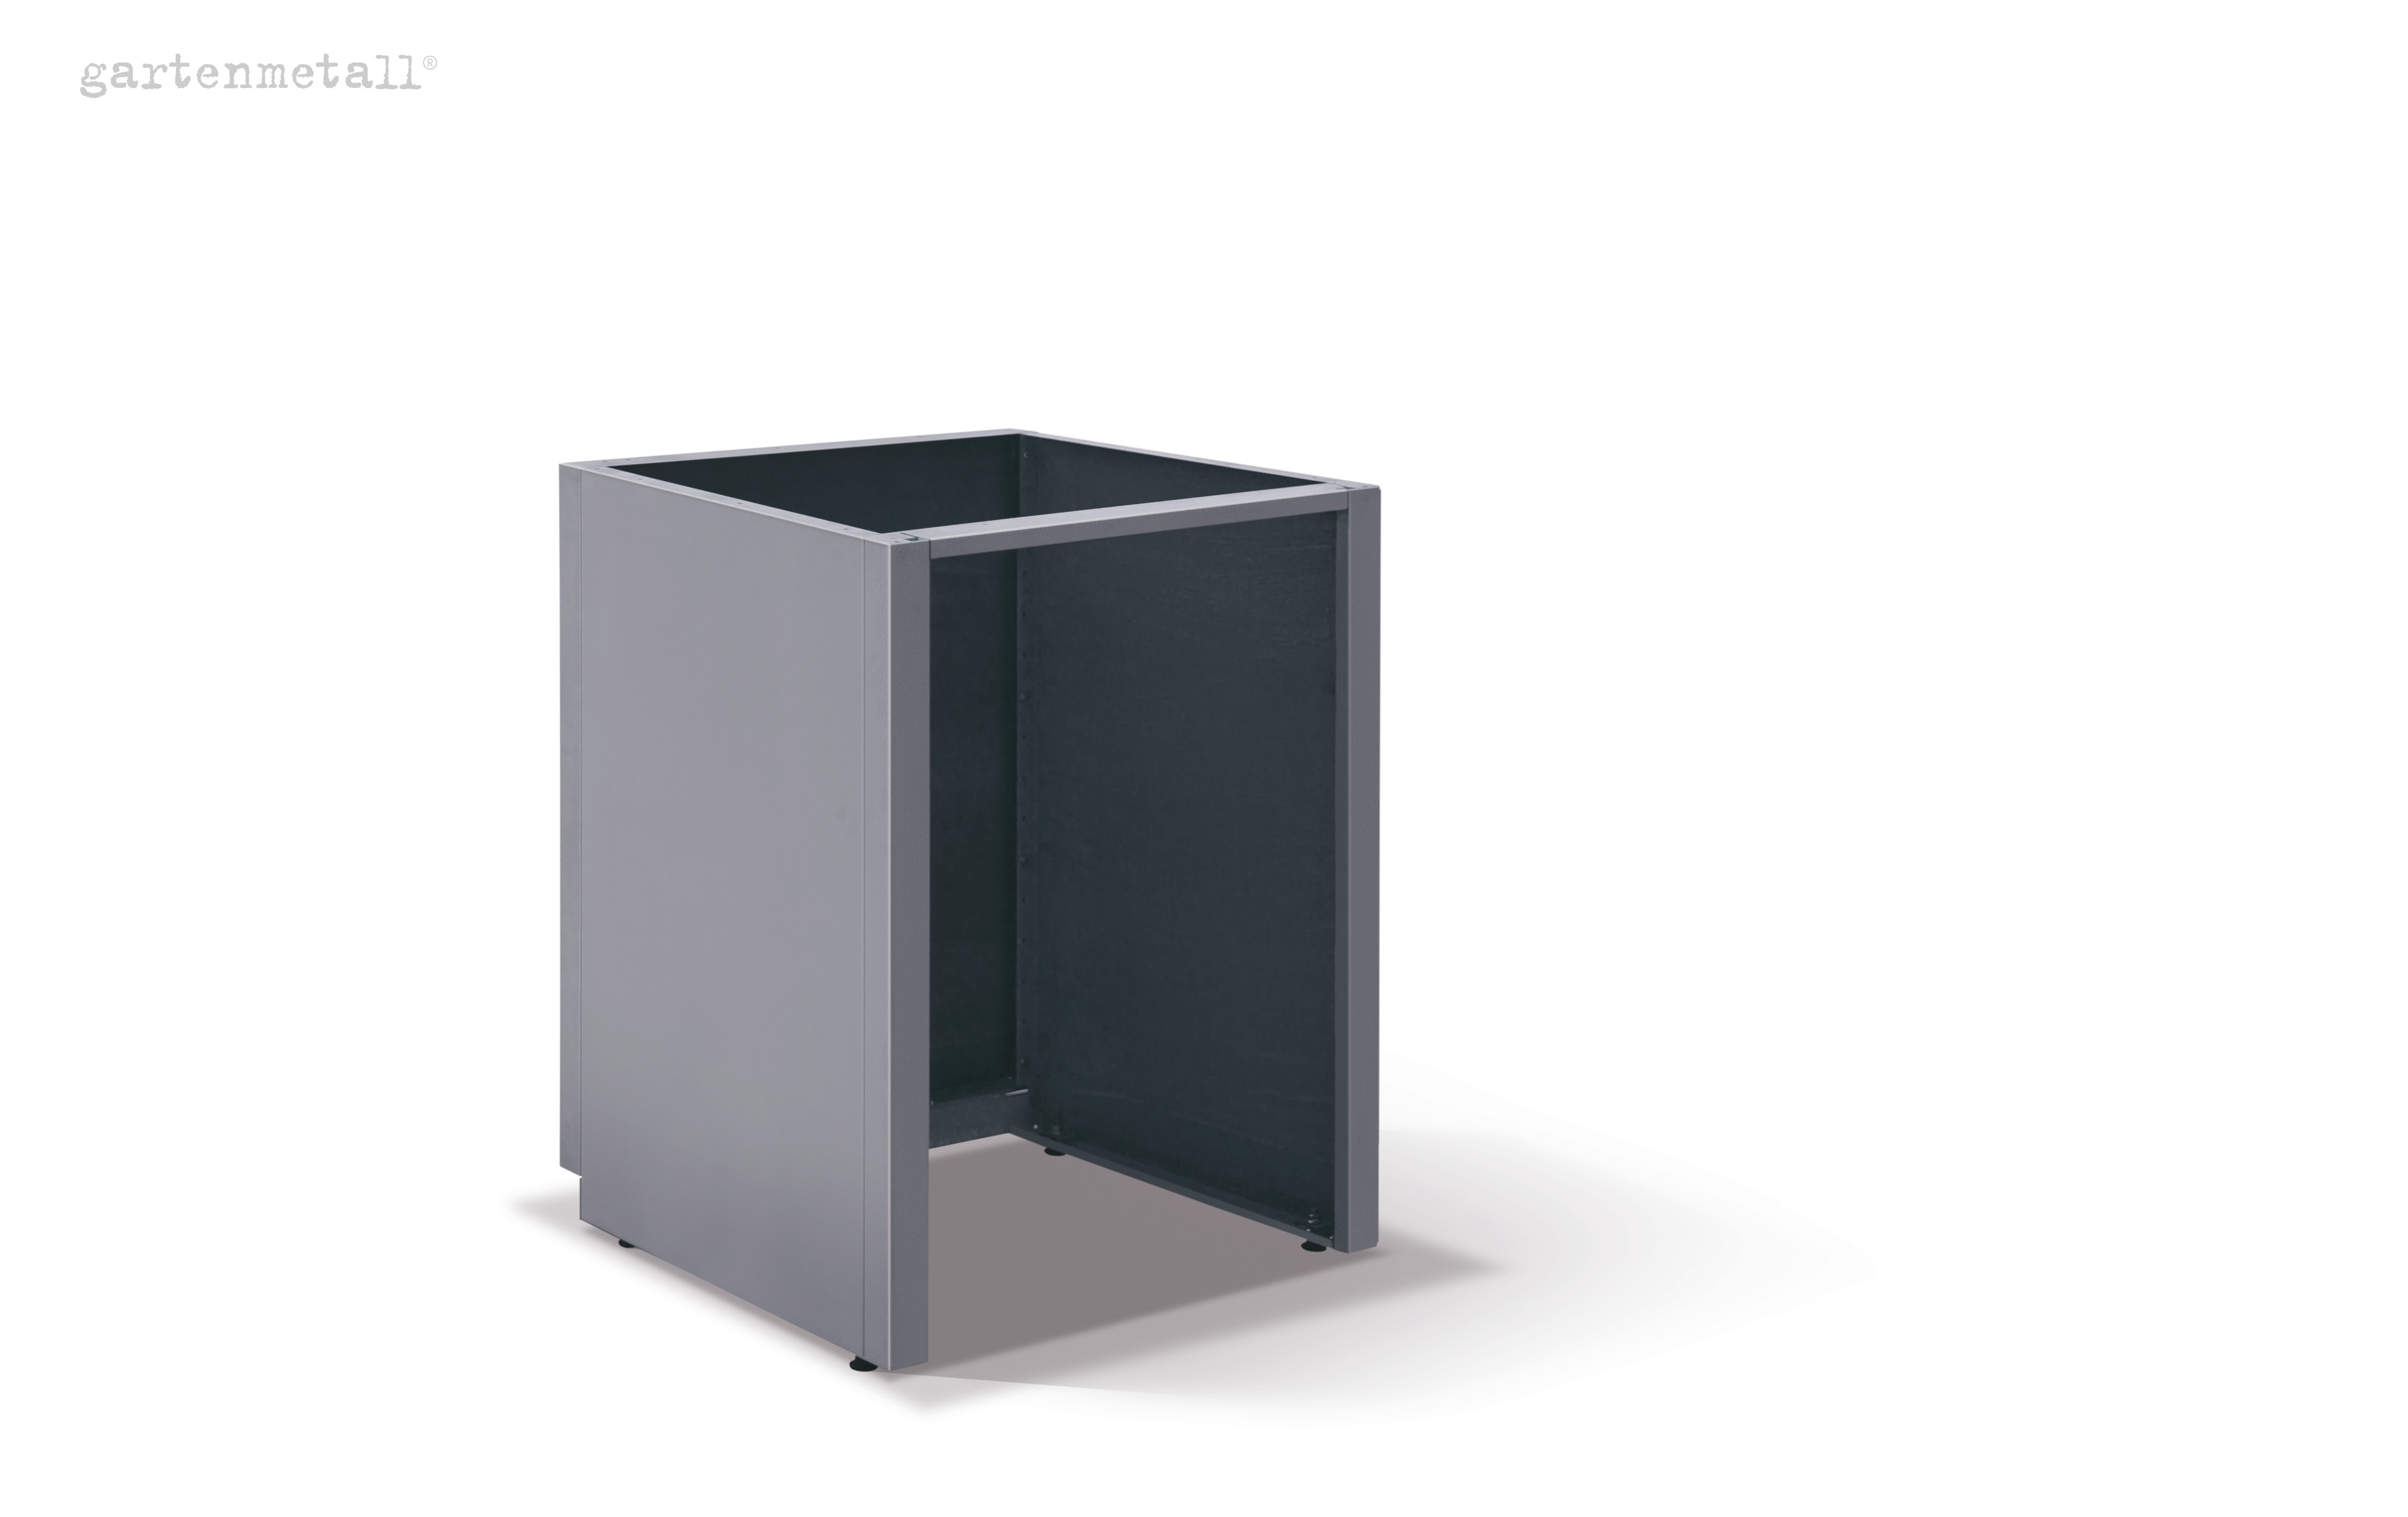 IBIZA base cabinet module for outdoor refrigerator